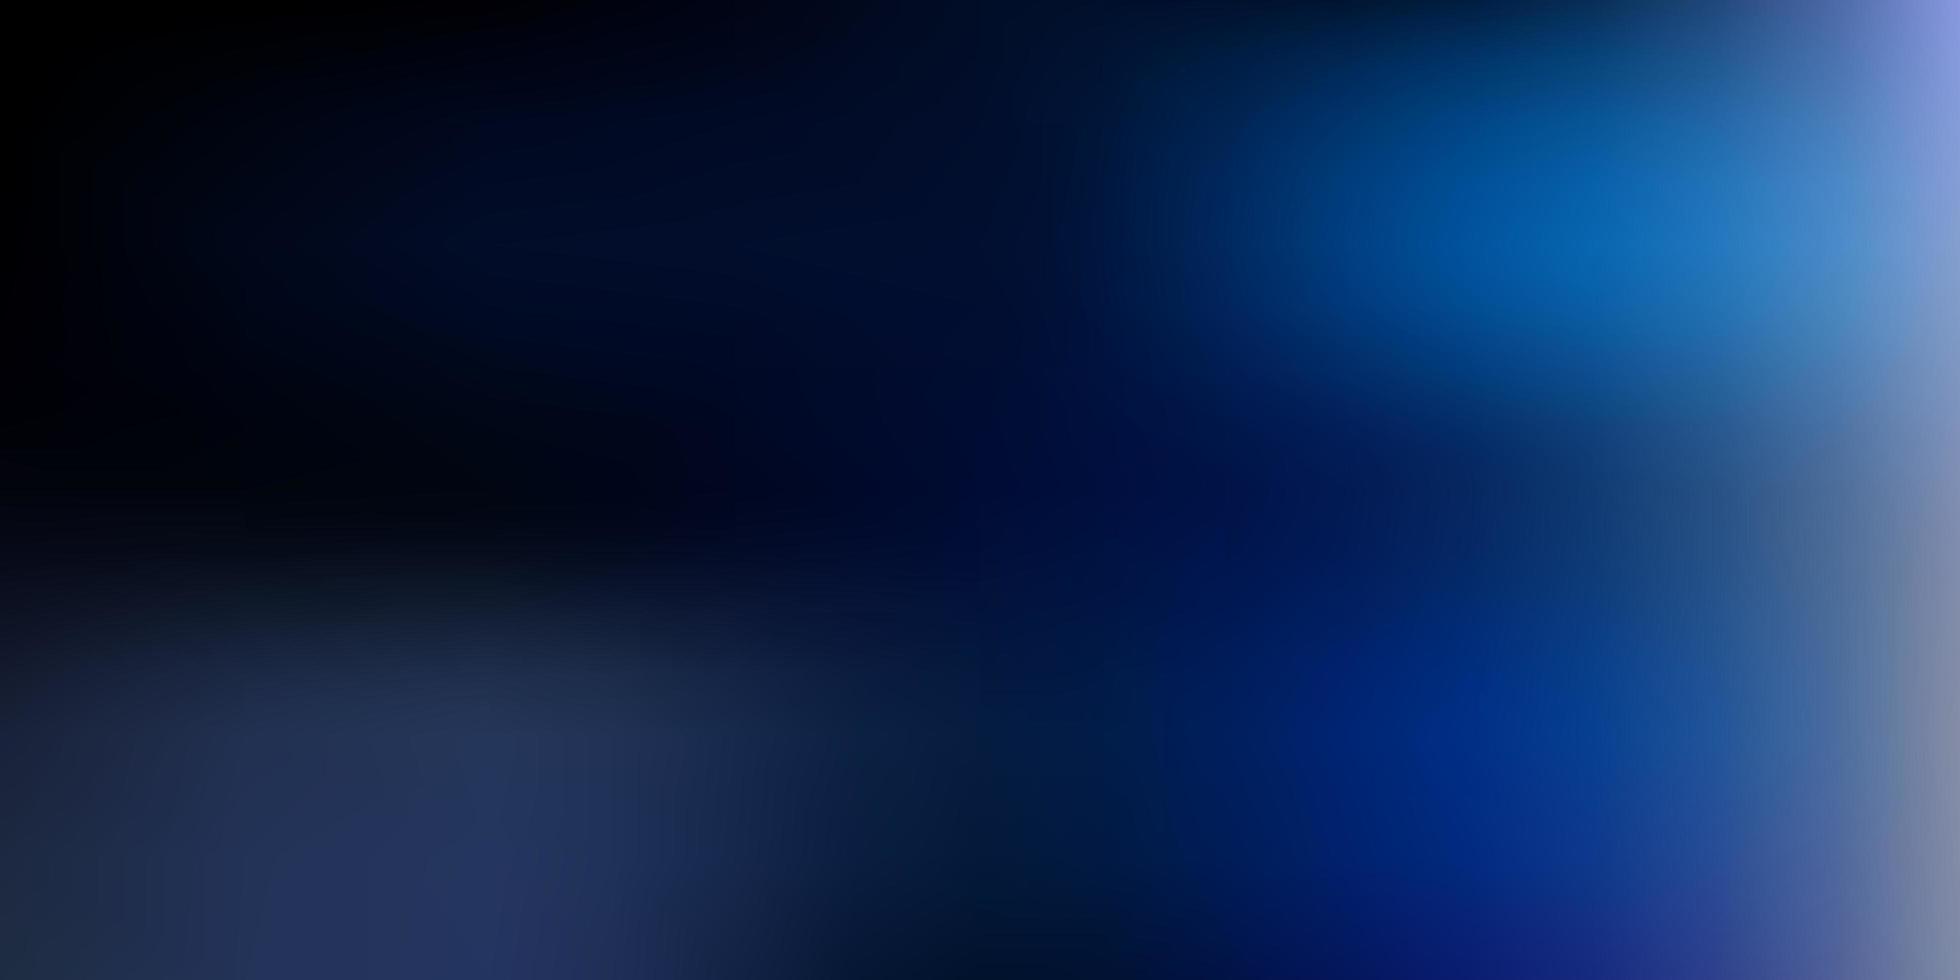 Dark blue vector abstract blur texture